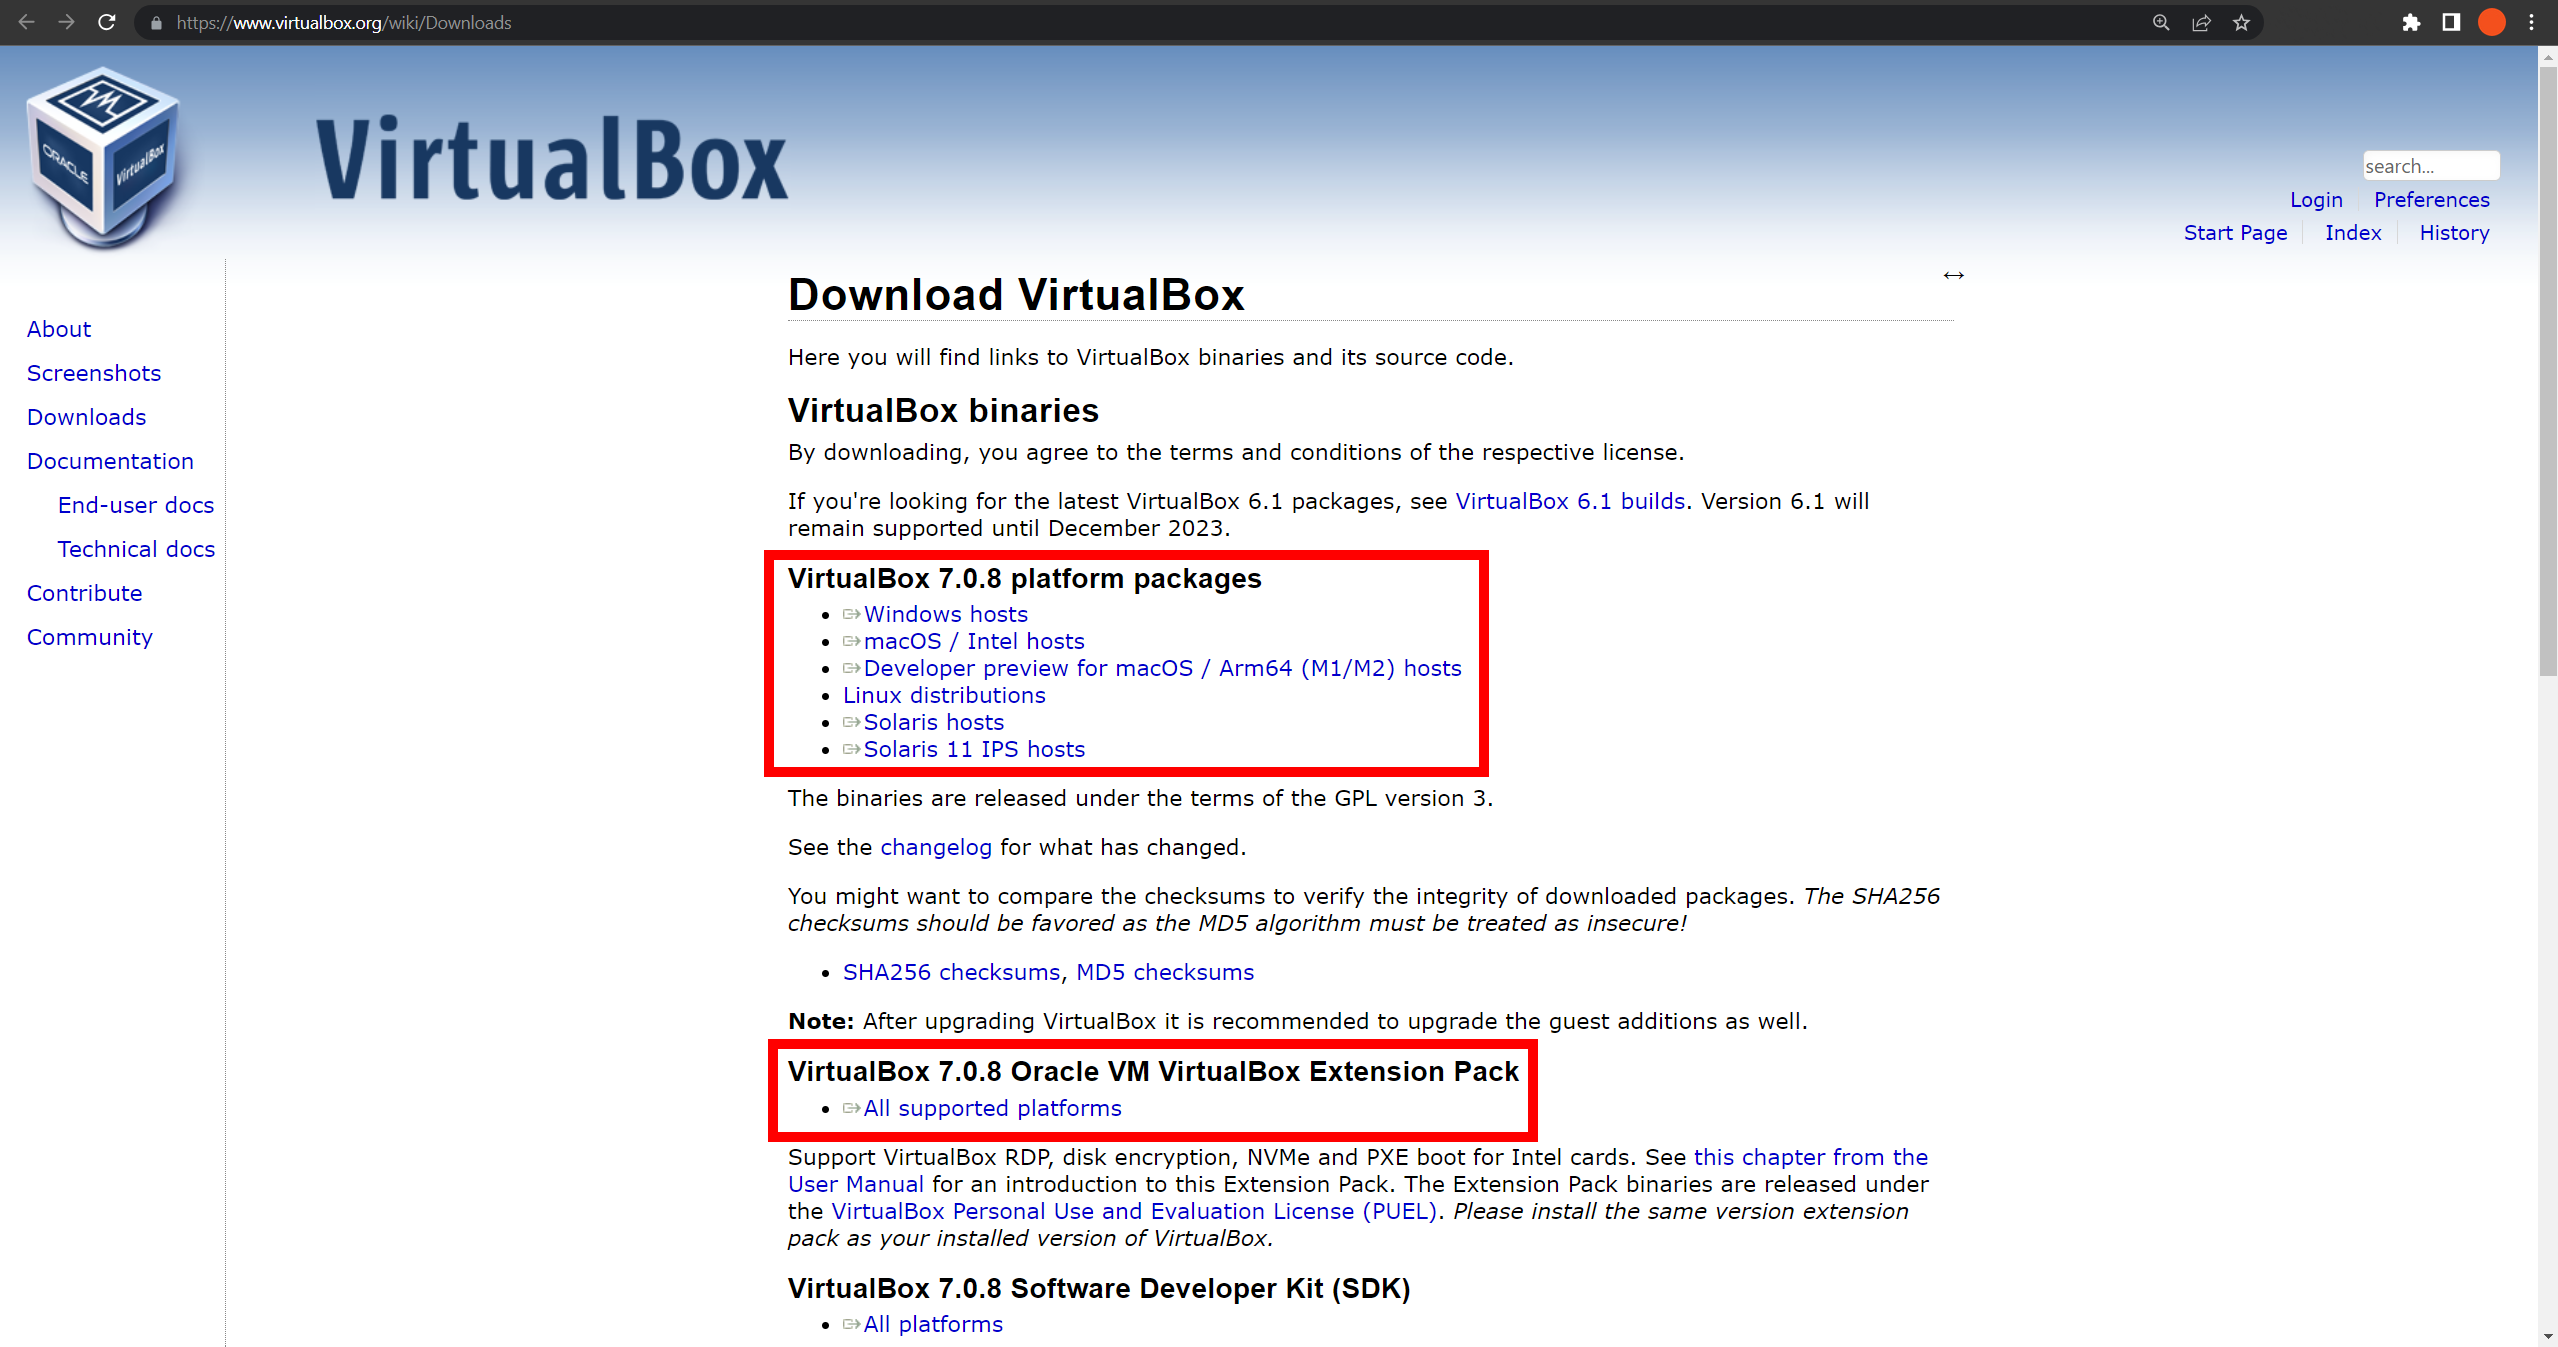 VirtualBox download page